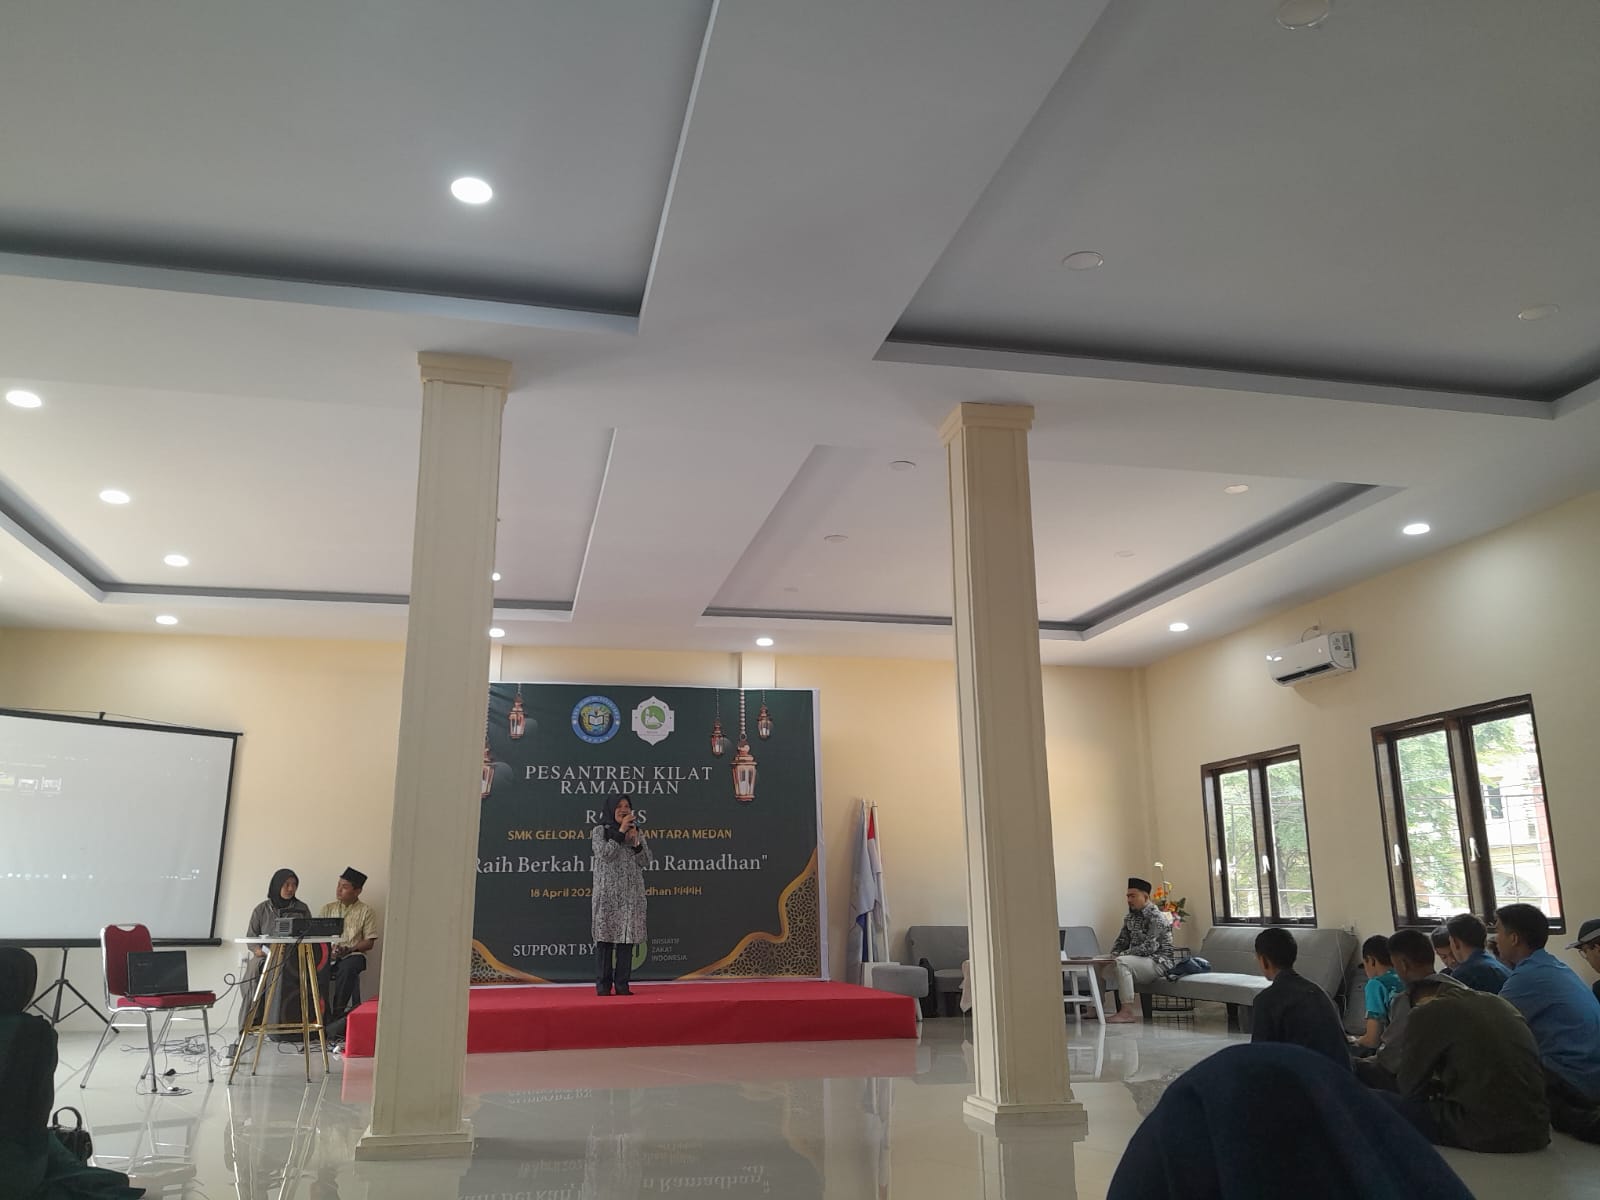 Pesantren Kilat Di SMK Gelora Jaya Nusantara